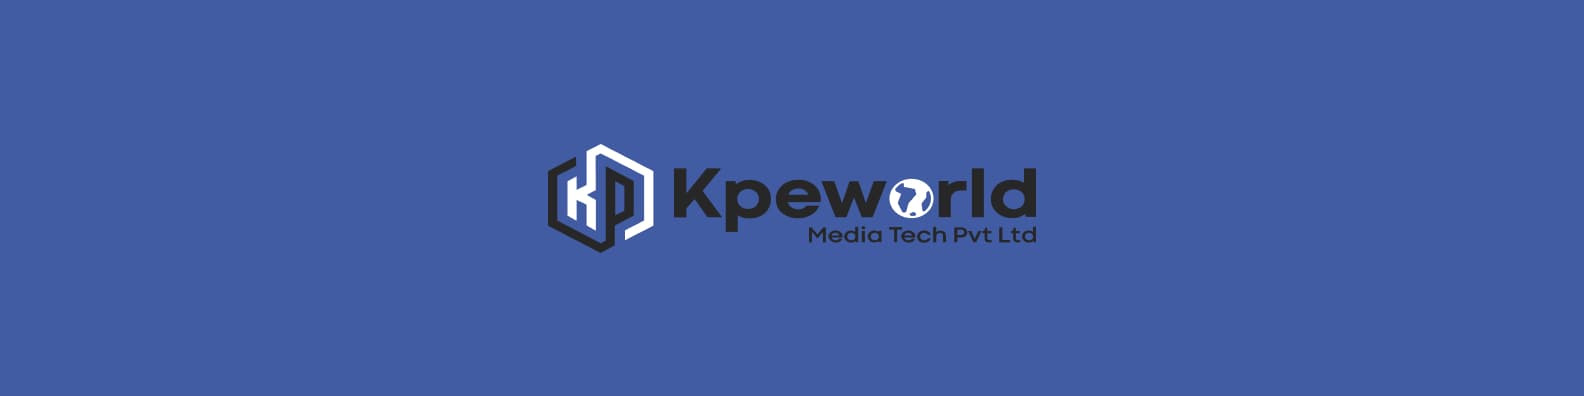 Kpeworld Media Tech Pvt Ltd cover picture